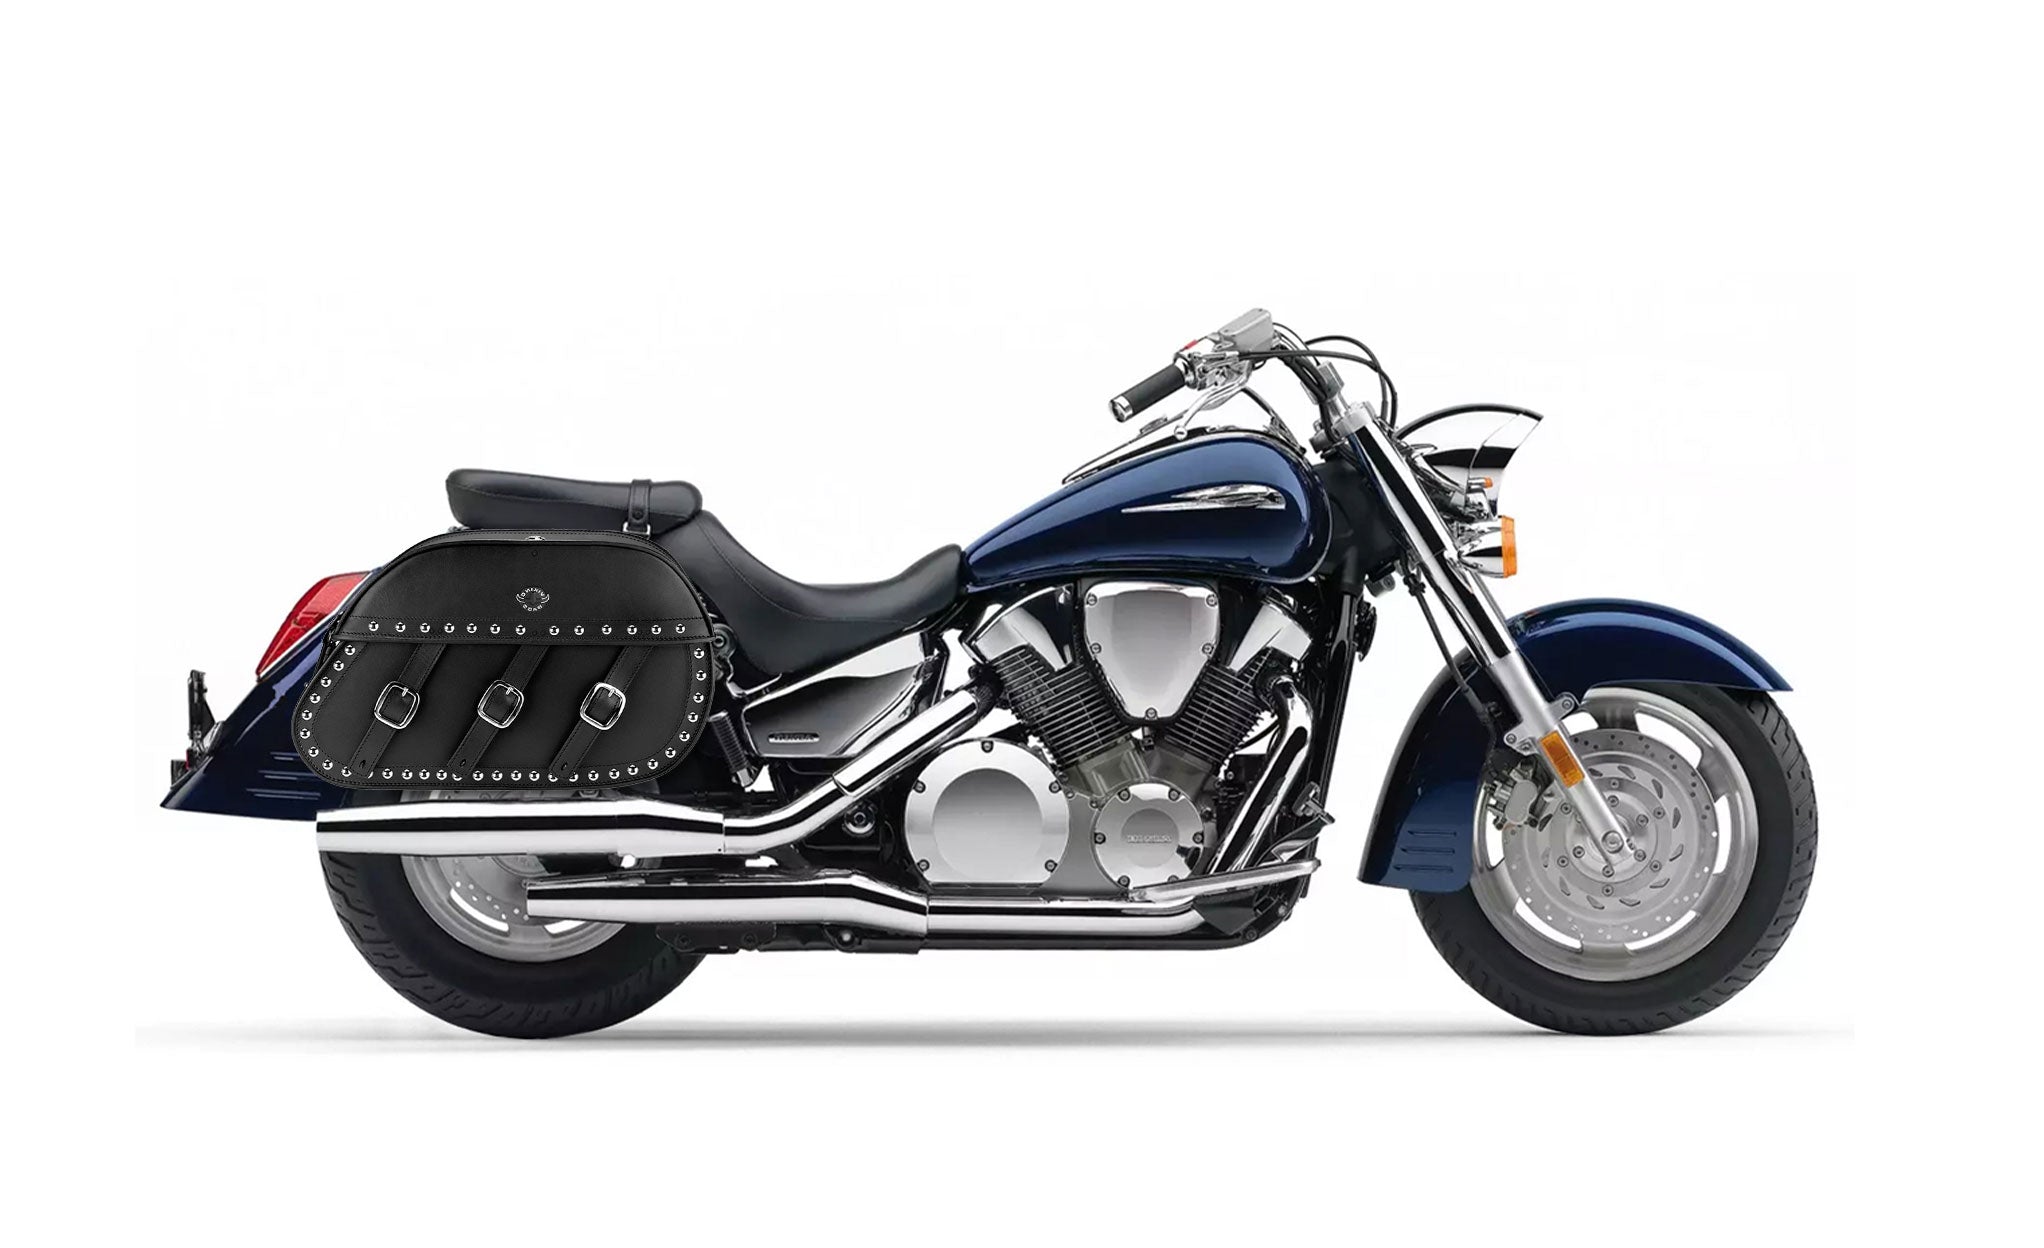 34L - Trianon Extra Large Honda VTX 1300 R (Retro) Studded Leather Motorcycle Saddlebags on Bike Photo @expand